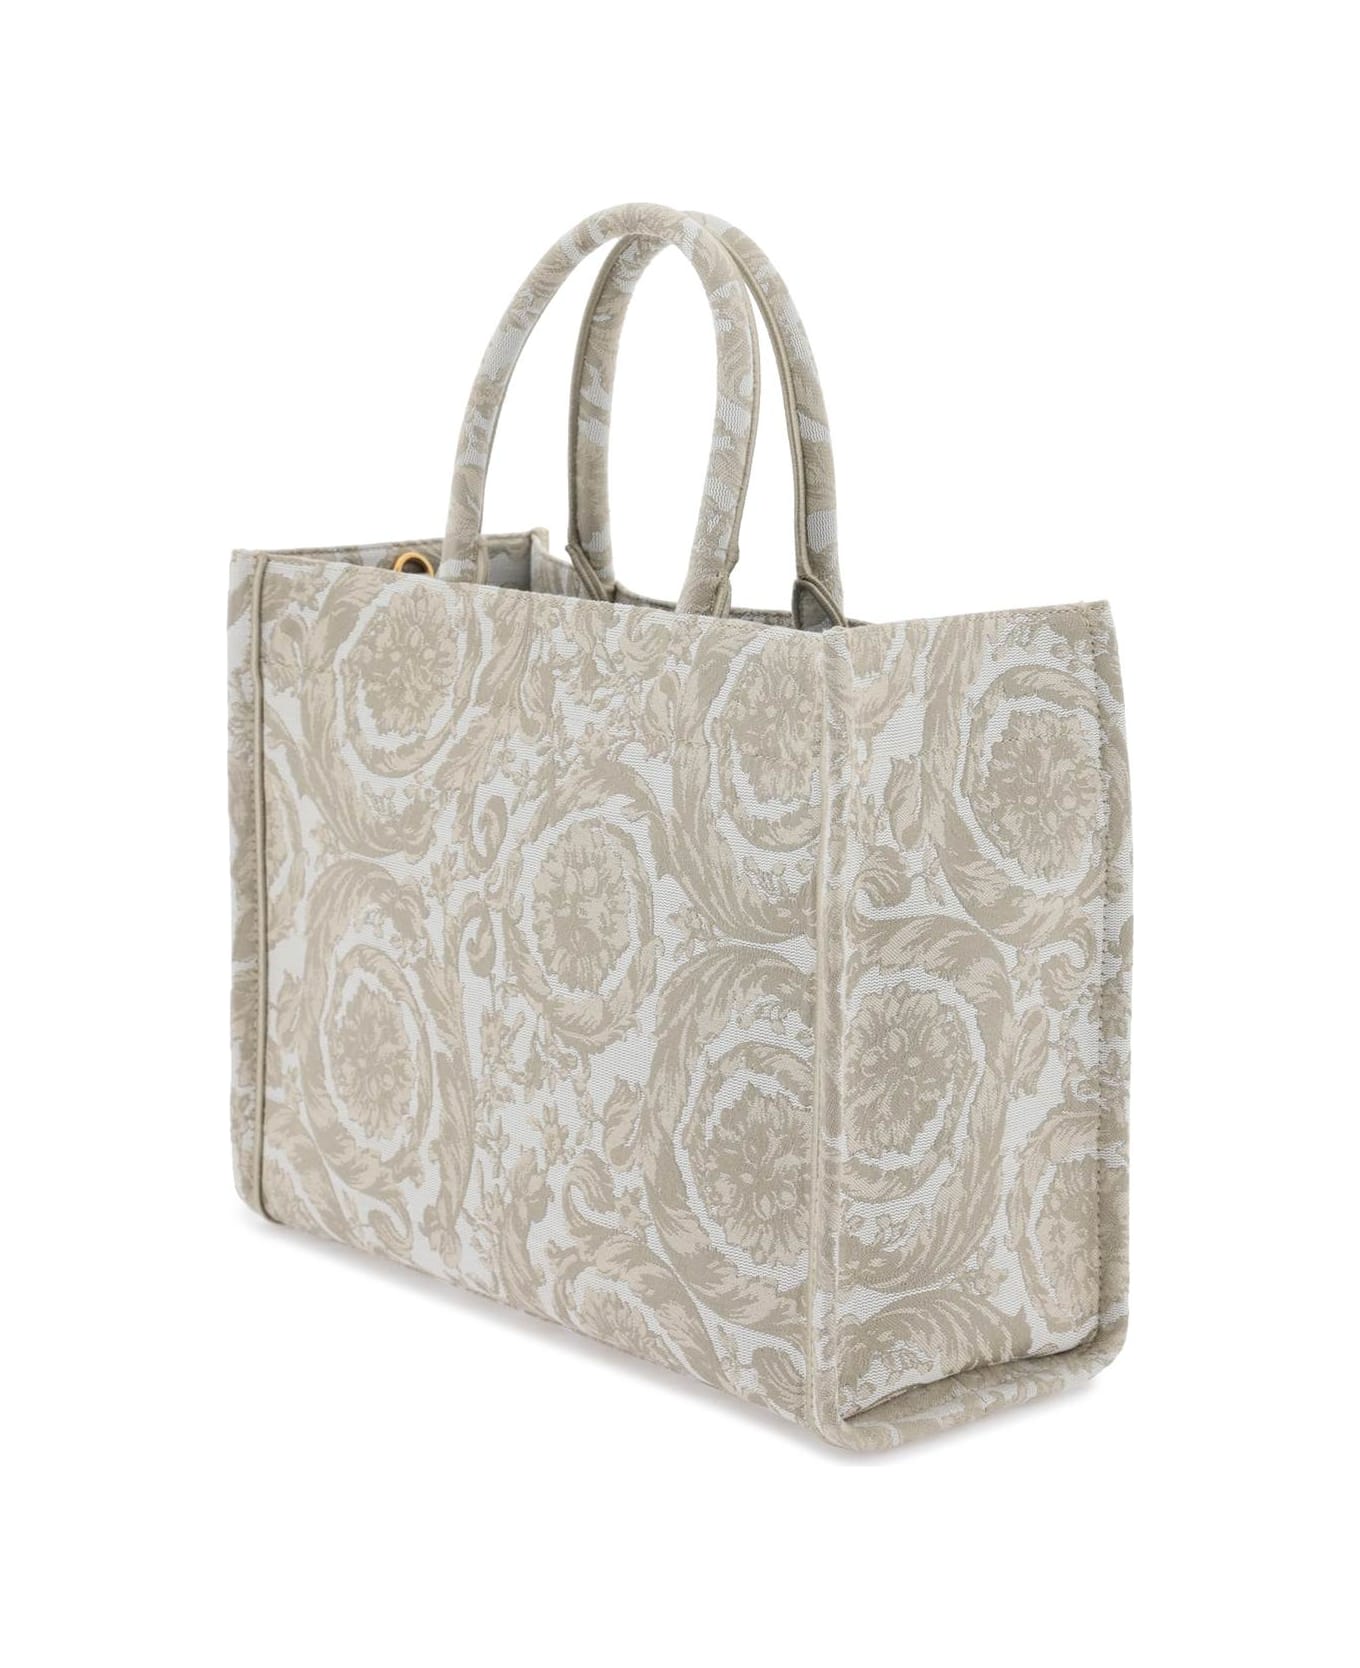 Versace Two-tone Fabric Bag - Paulas Ibiza Bucket-Bag Sailor Small